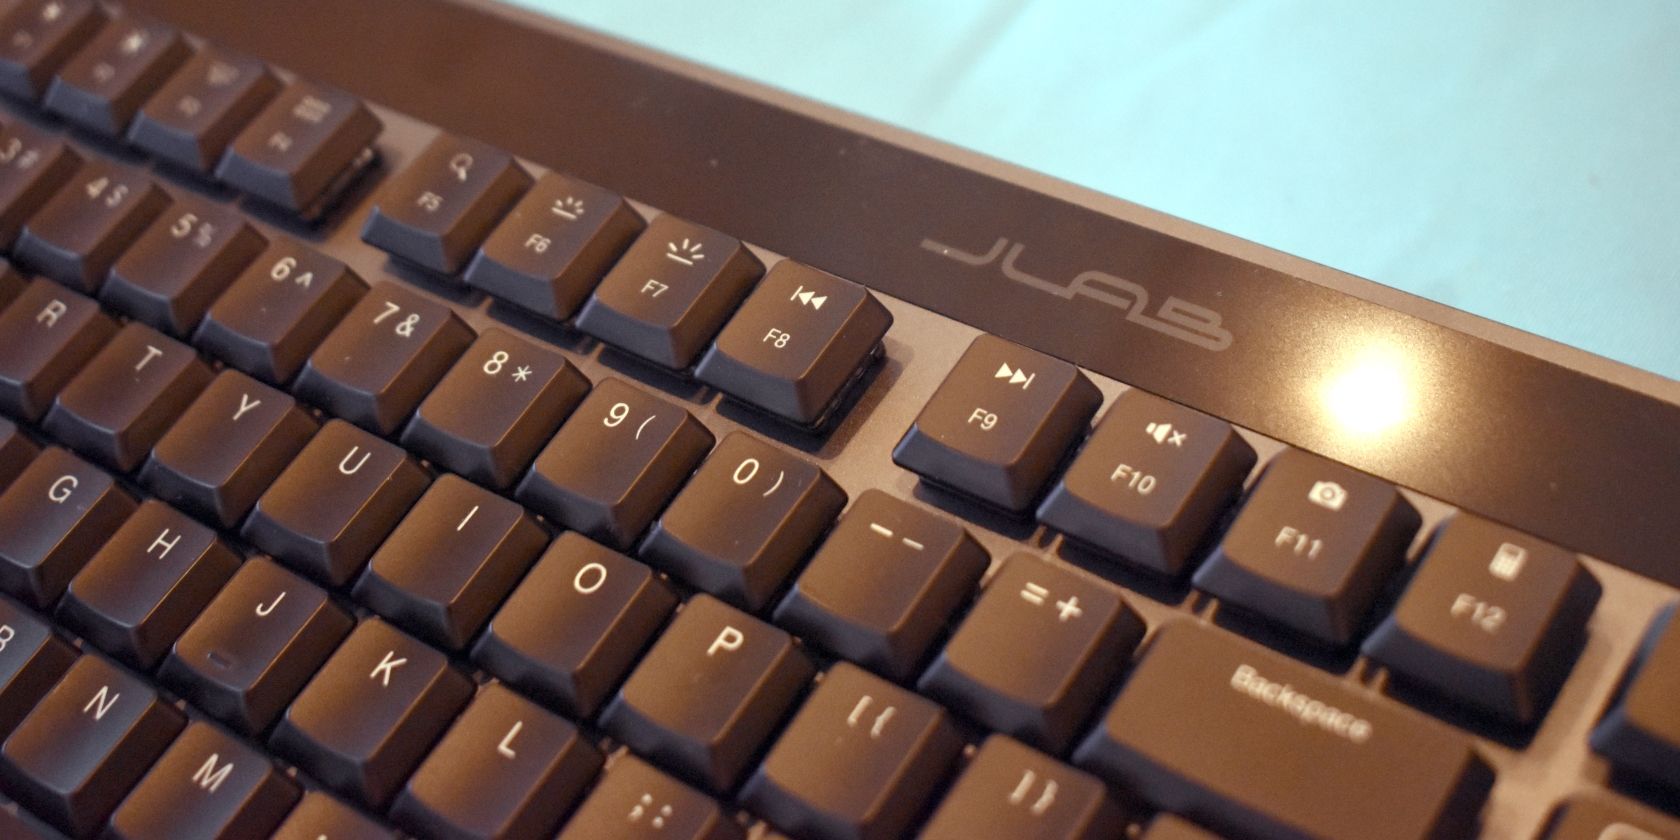 jlab epic mechanical keyboard feature